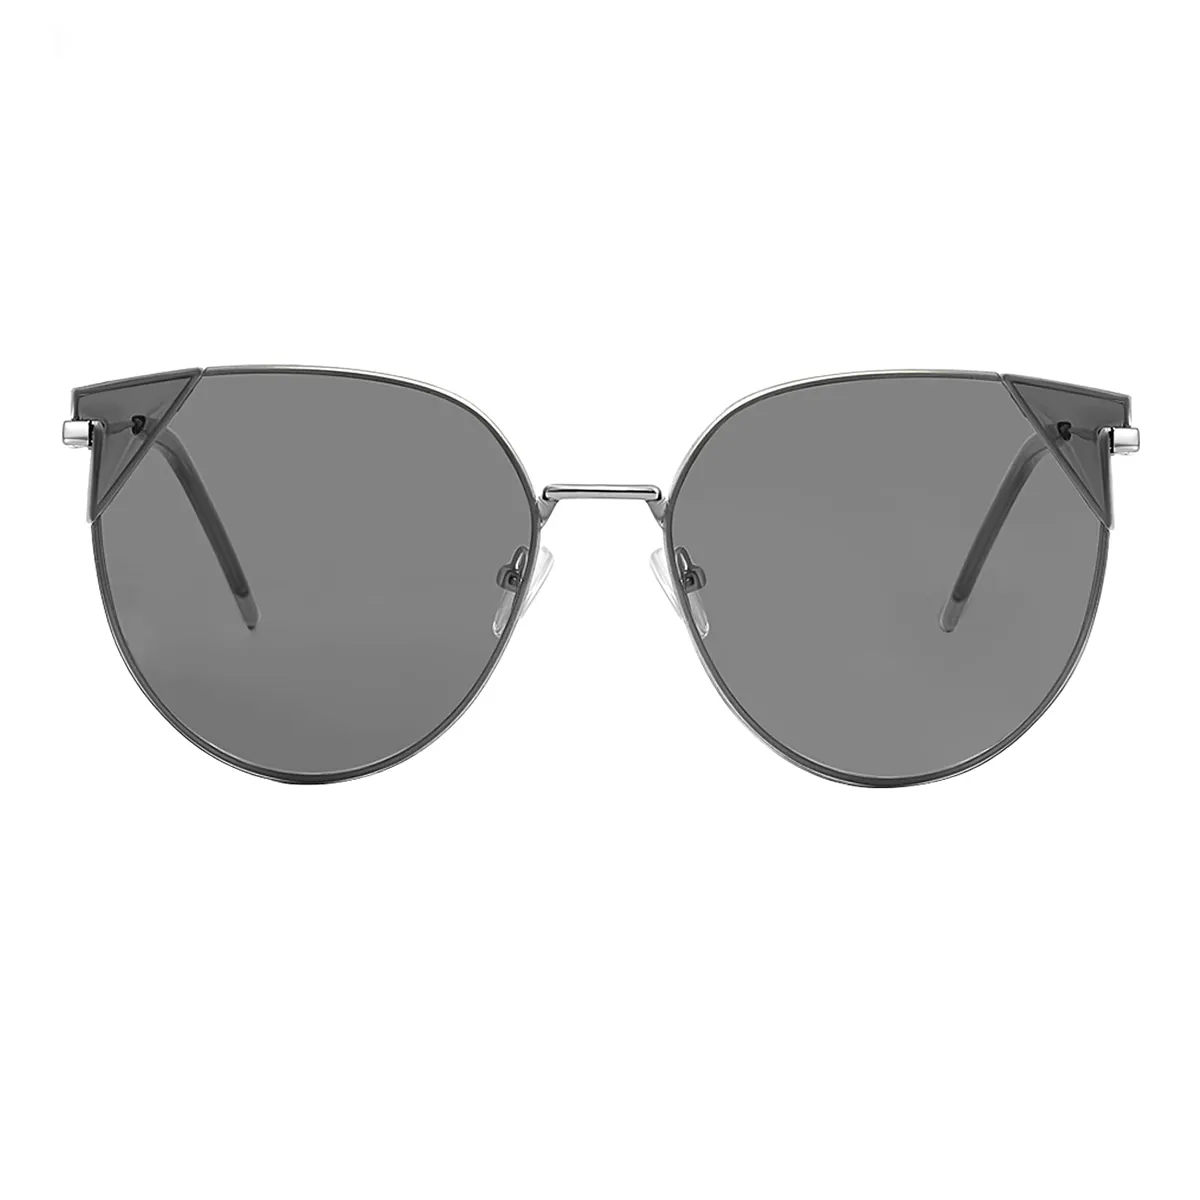 Fashion Cat-eye Silver/1  Sunglasses for Women